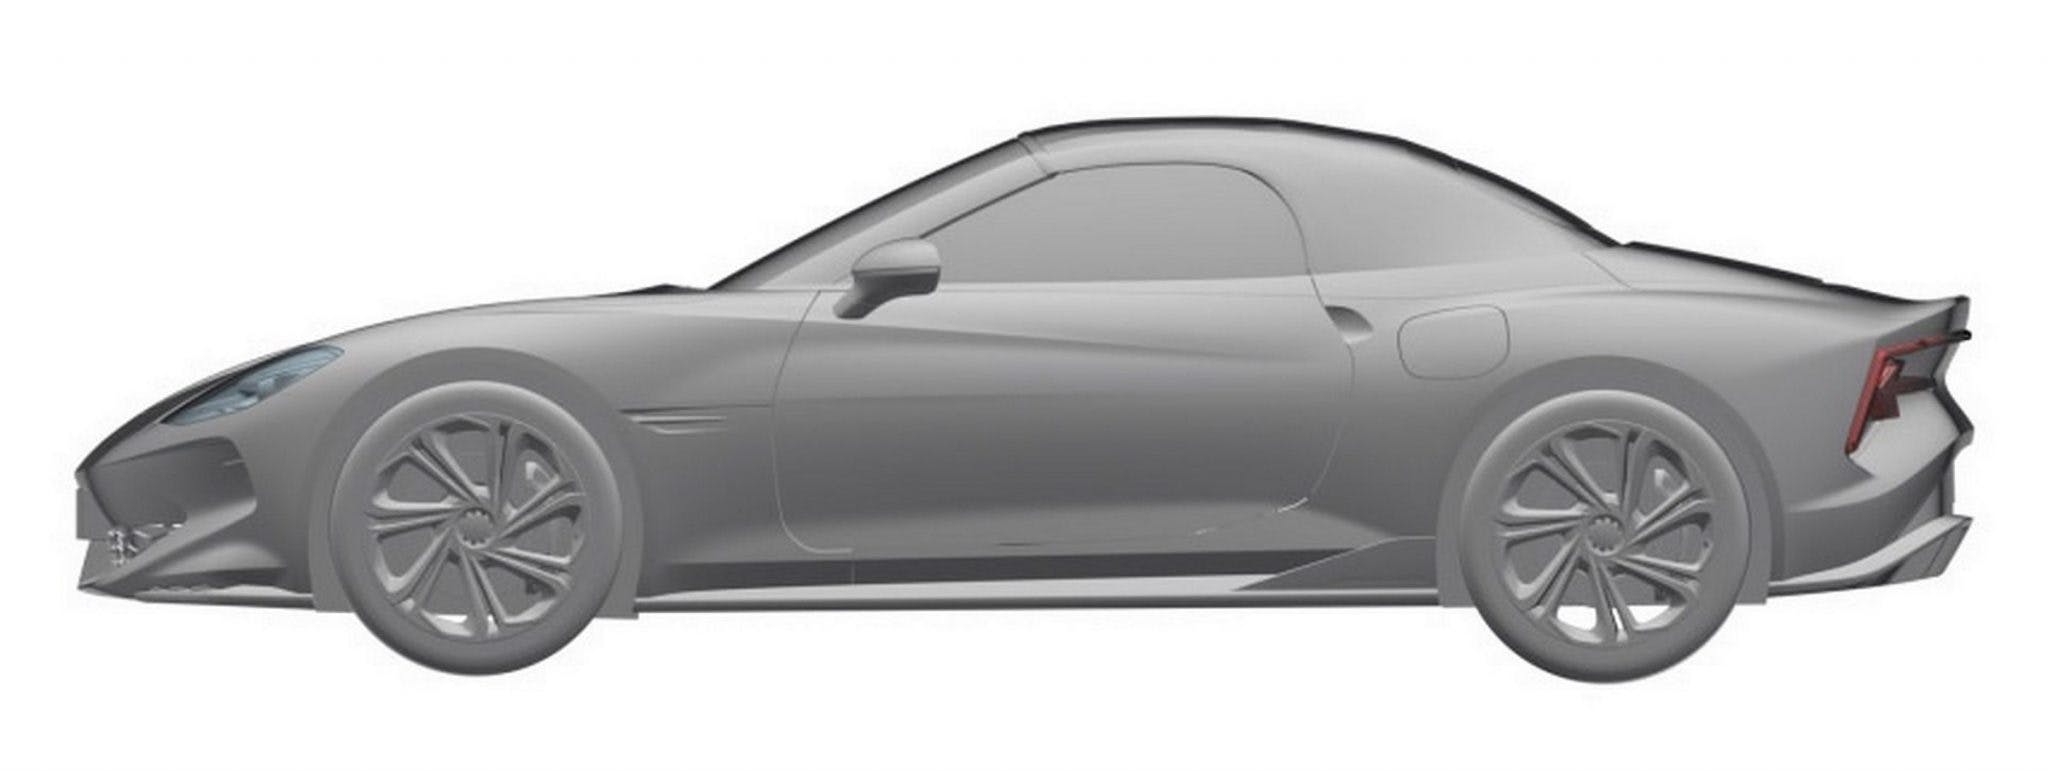 MG Roadster EV rendering side profile